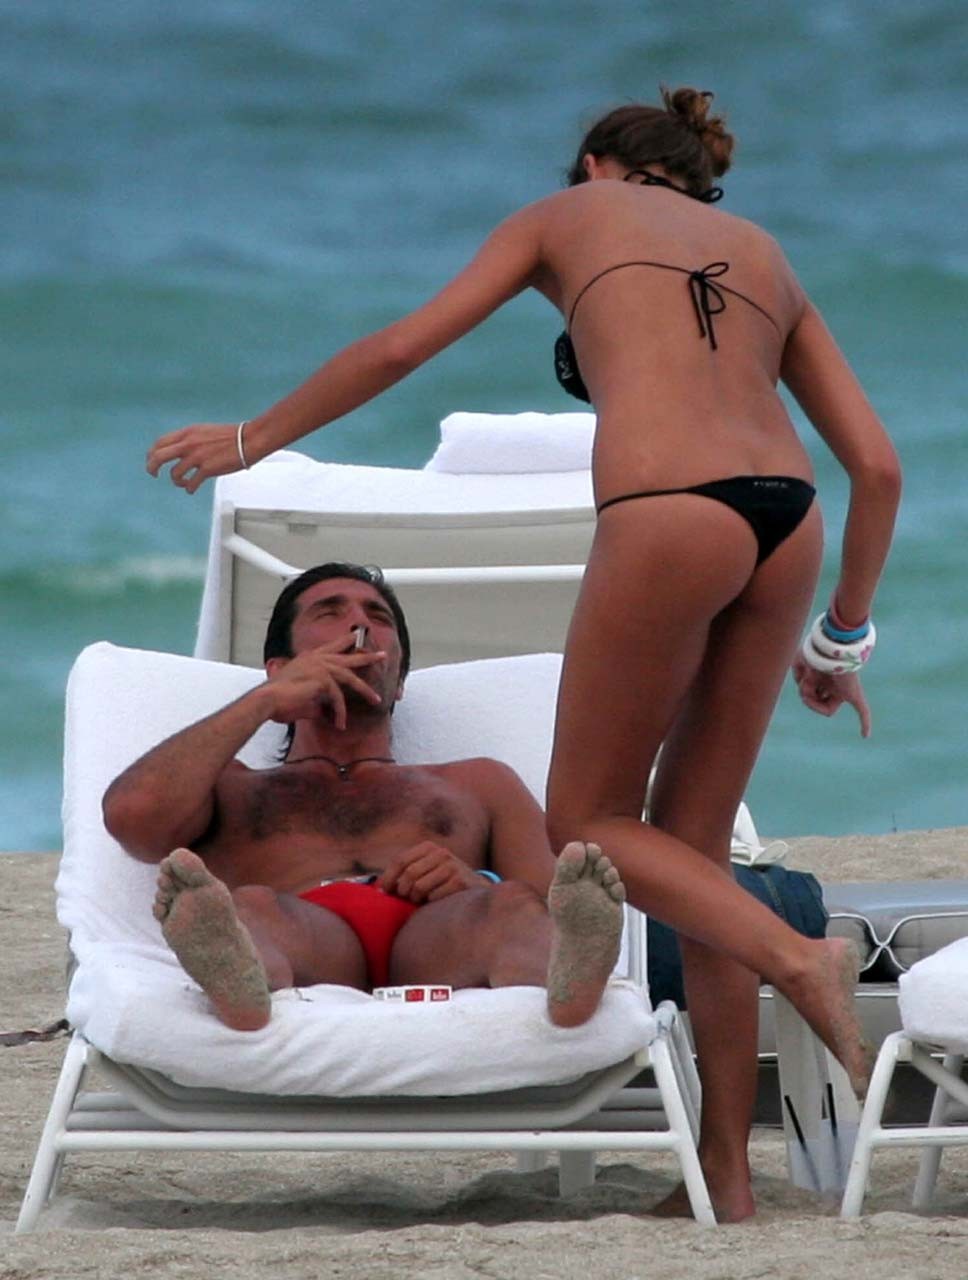 Alena Seredova riding some guy on beach and exposing her big boobs paparazzi sho #75320123